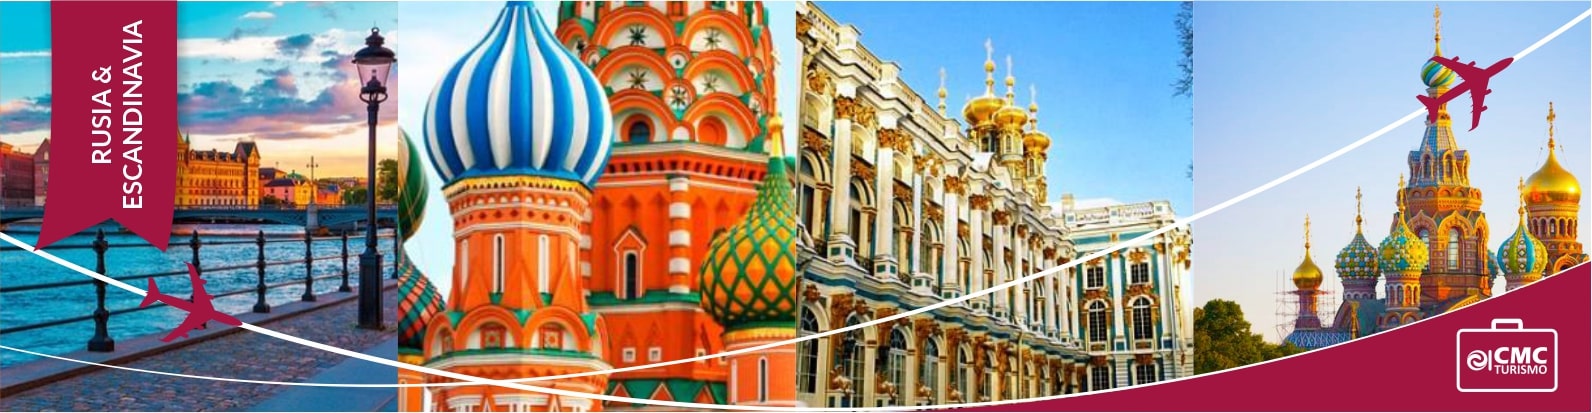 cabecera para pdf excursiones Rusia CMC Turismo-min